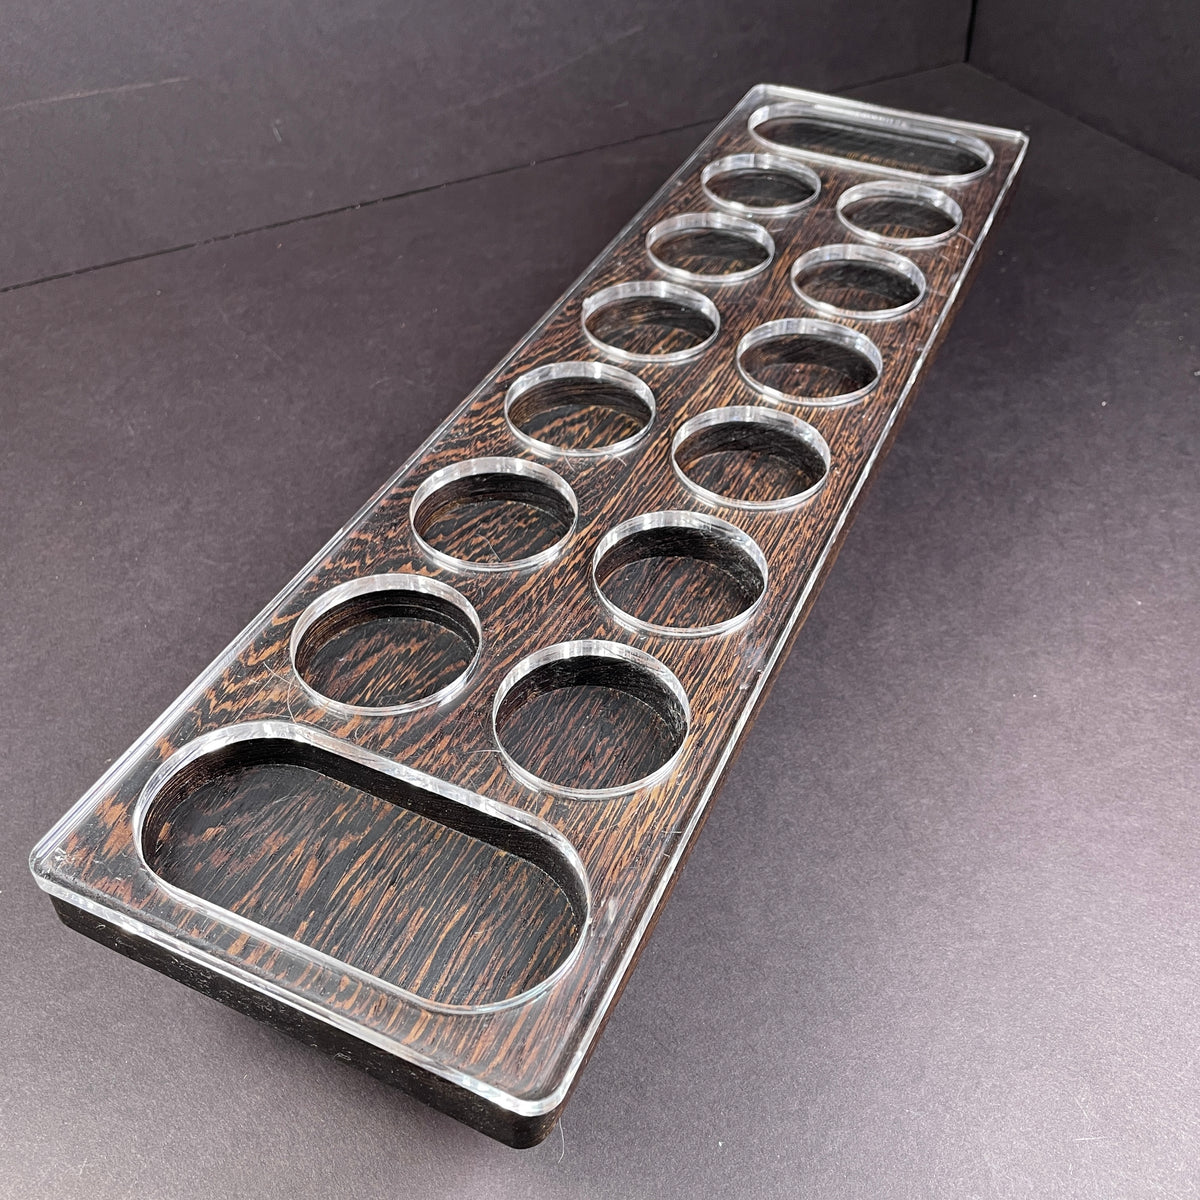 Mancala Board Game Resin Molds Set Mancala Stones Mold Resin